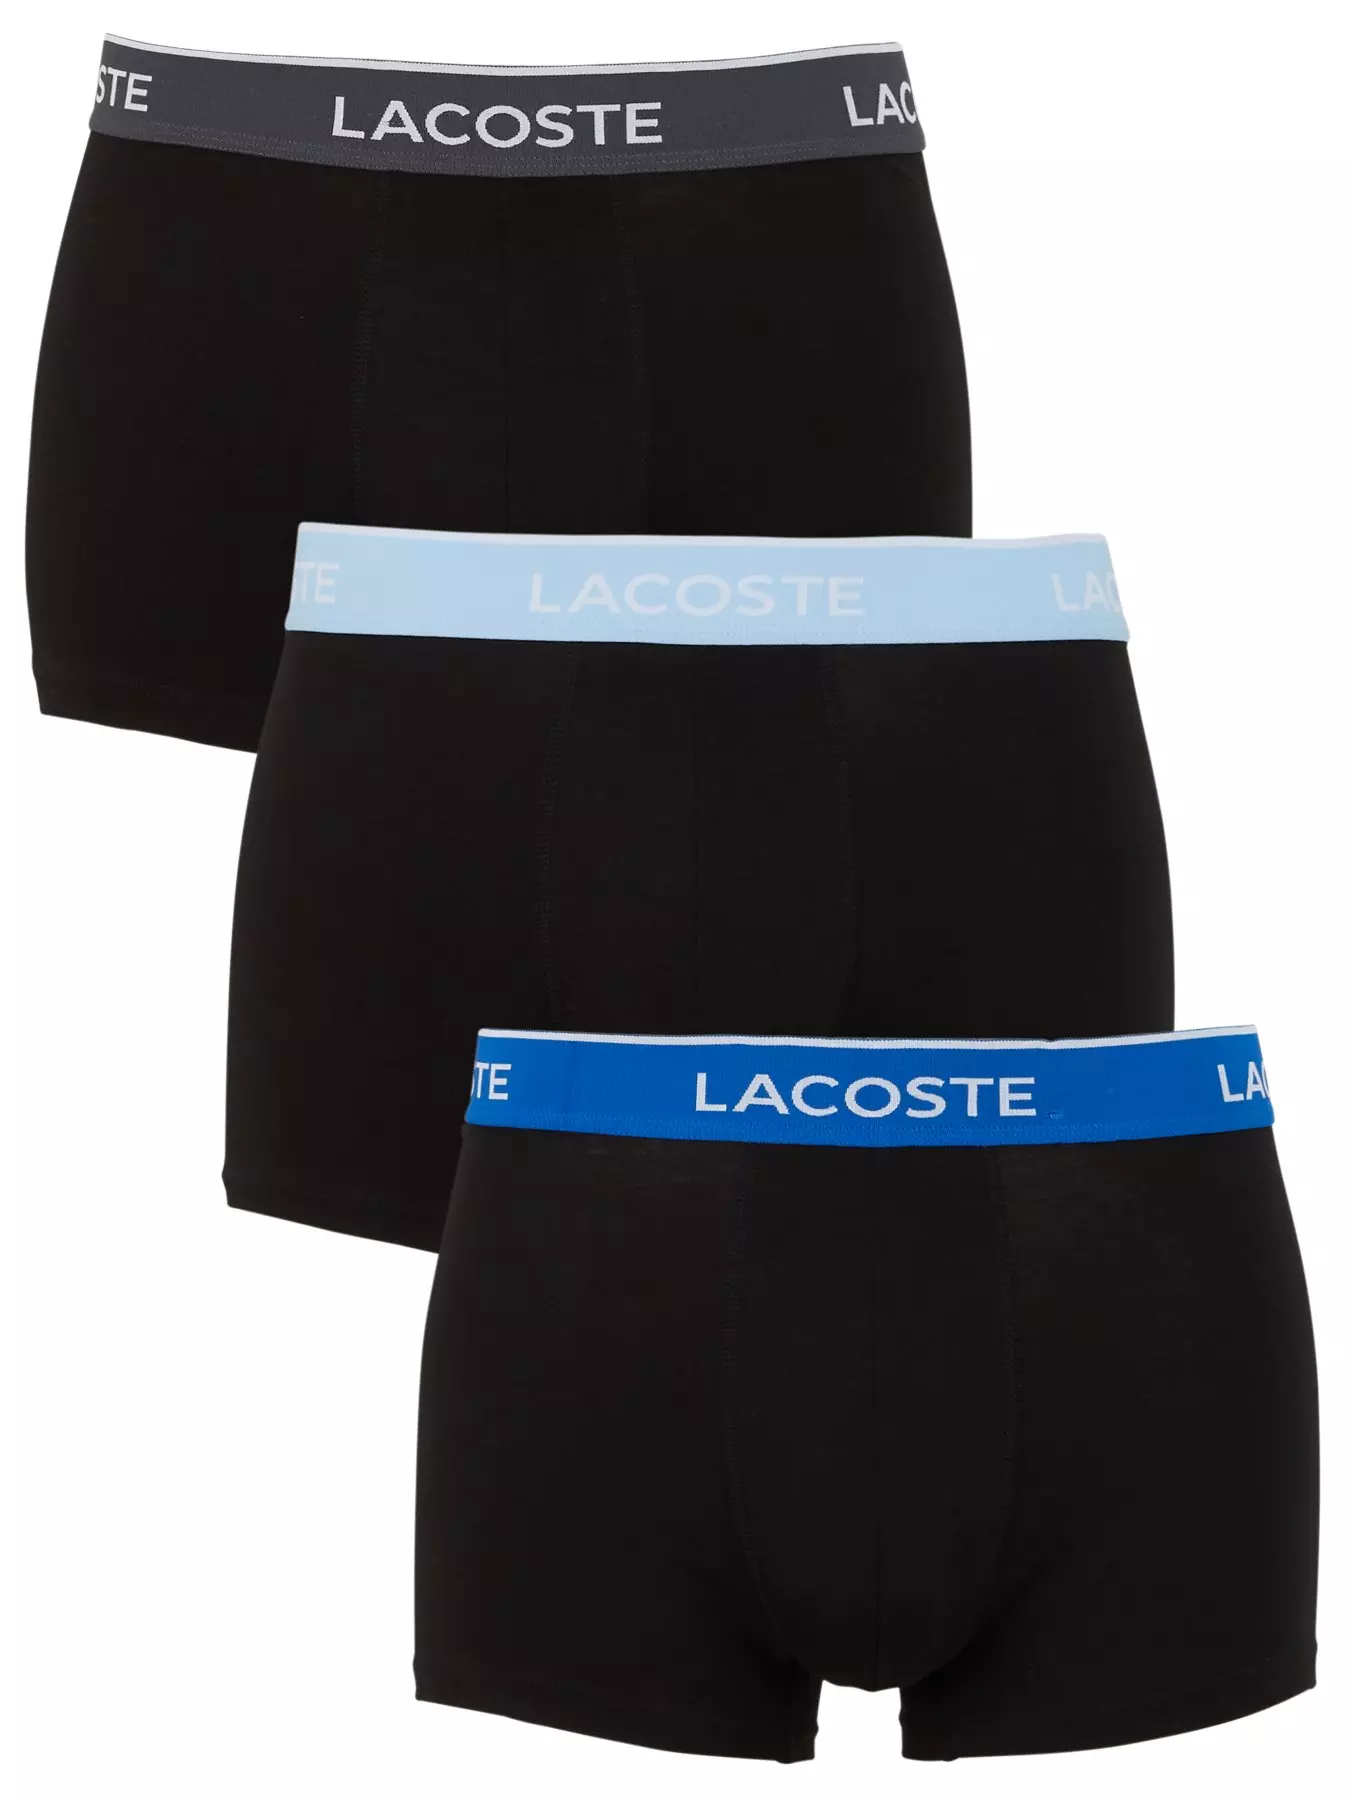 Underpants long 2-pack organic cotton soft waistband cuffs space